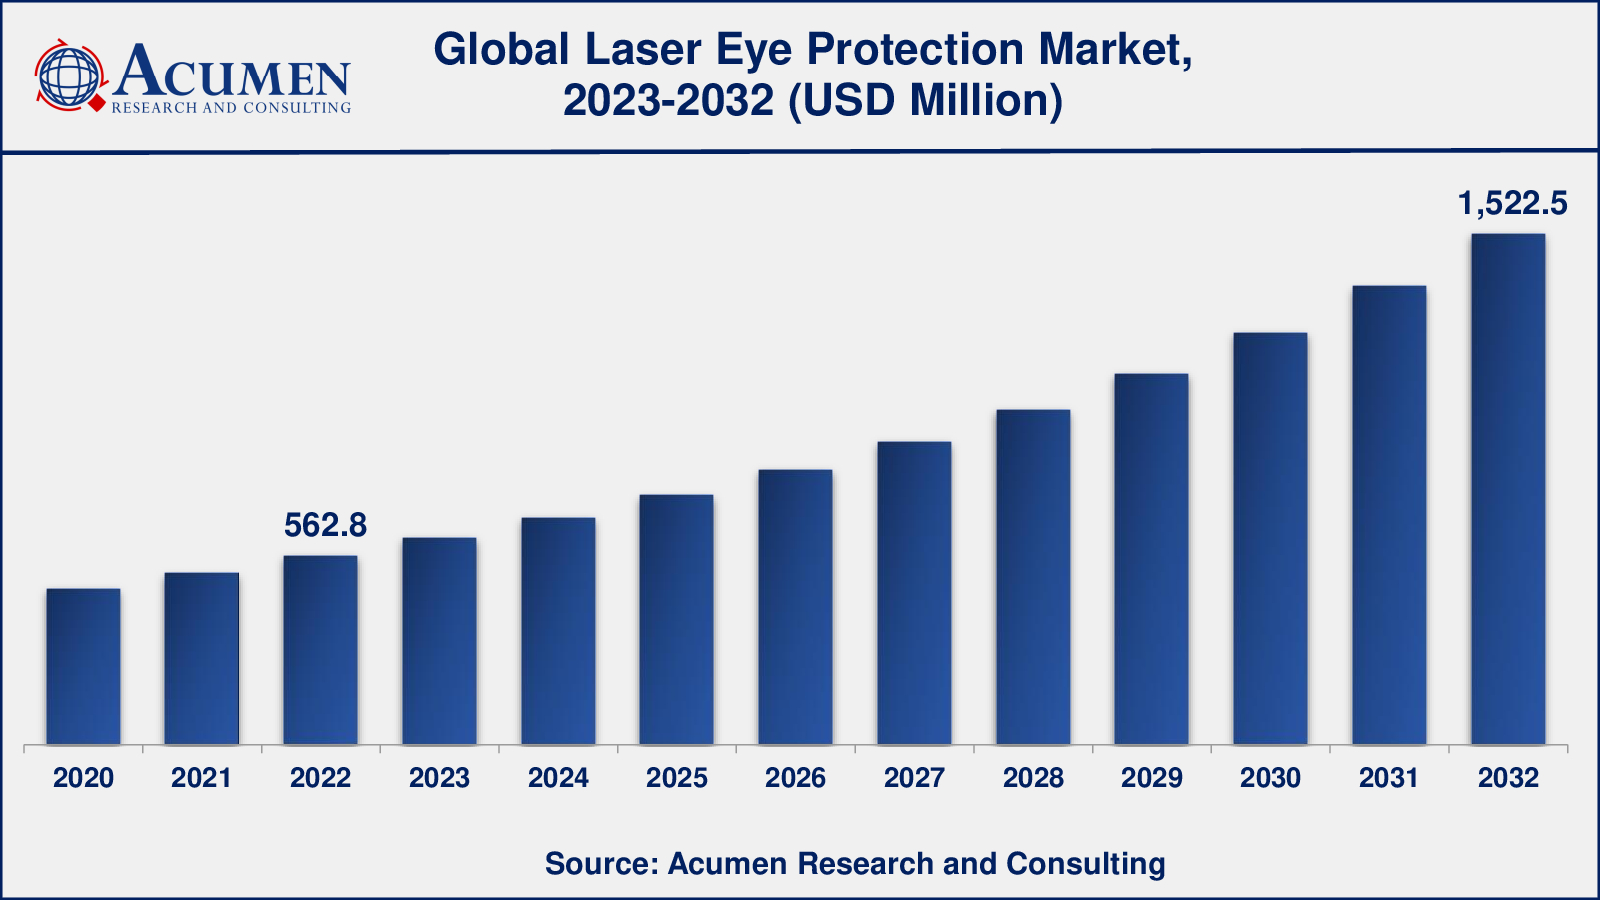 Laser Eye Protection Market Analysis Period